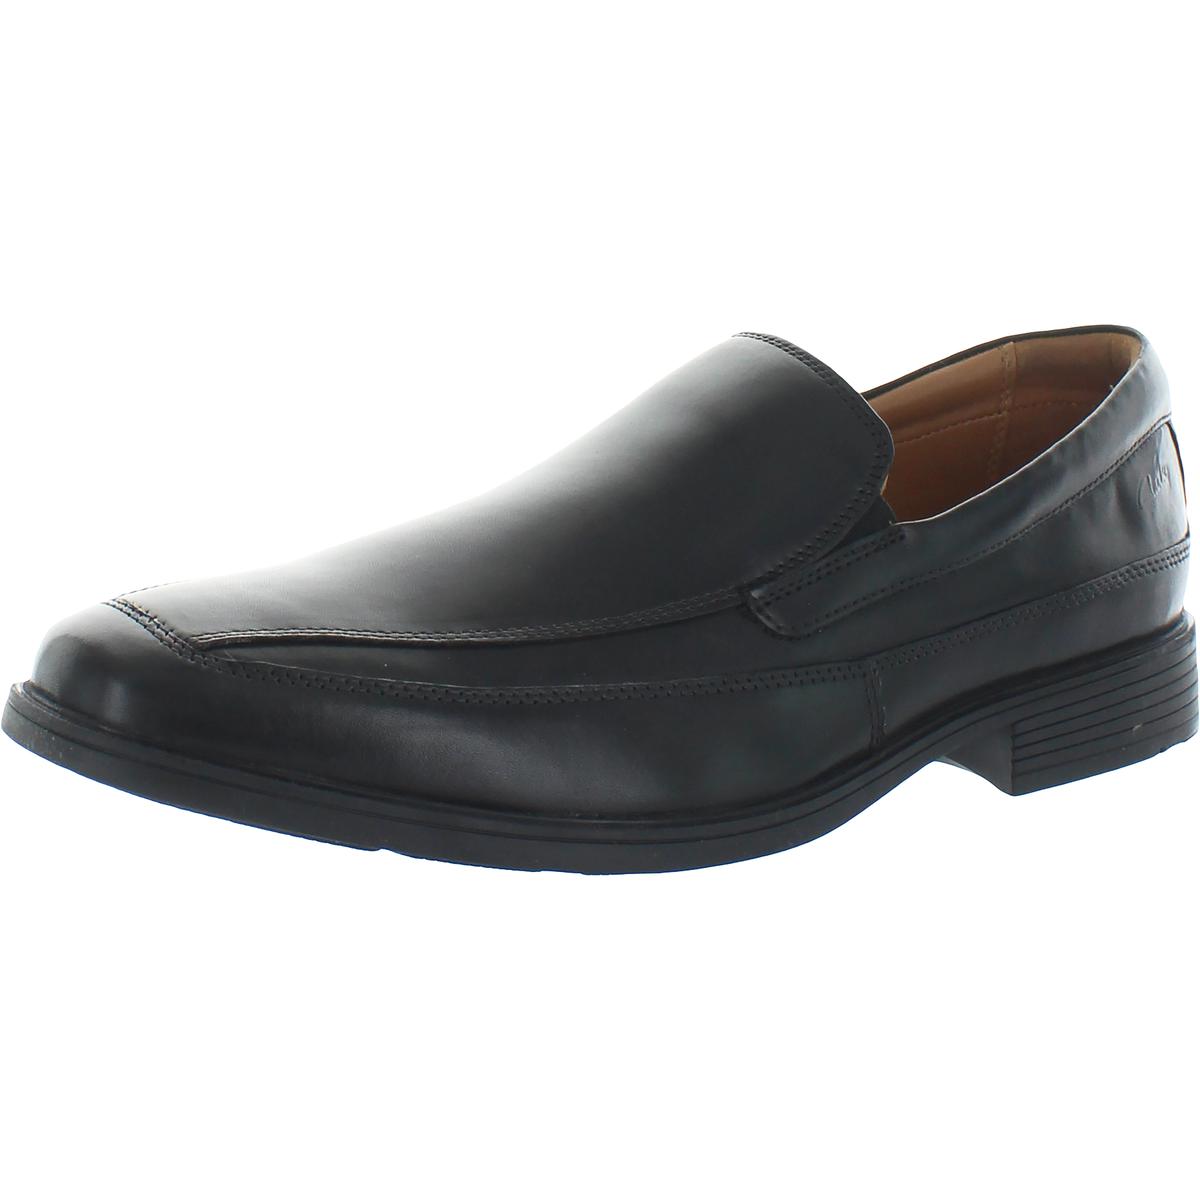 Mens TILDEN FREE Black slip on  shoes by clarks Retail price £49.99 